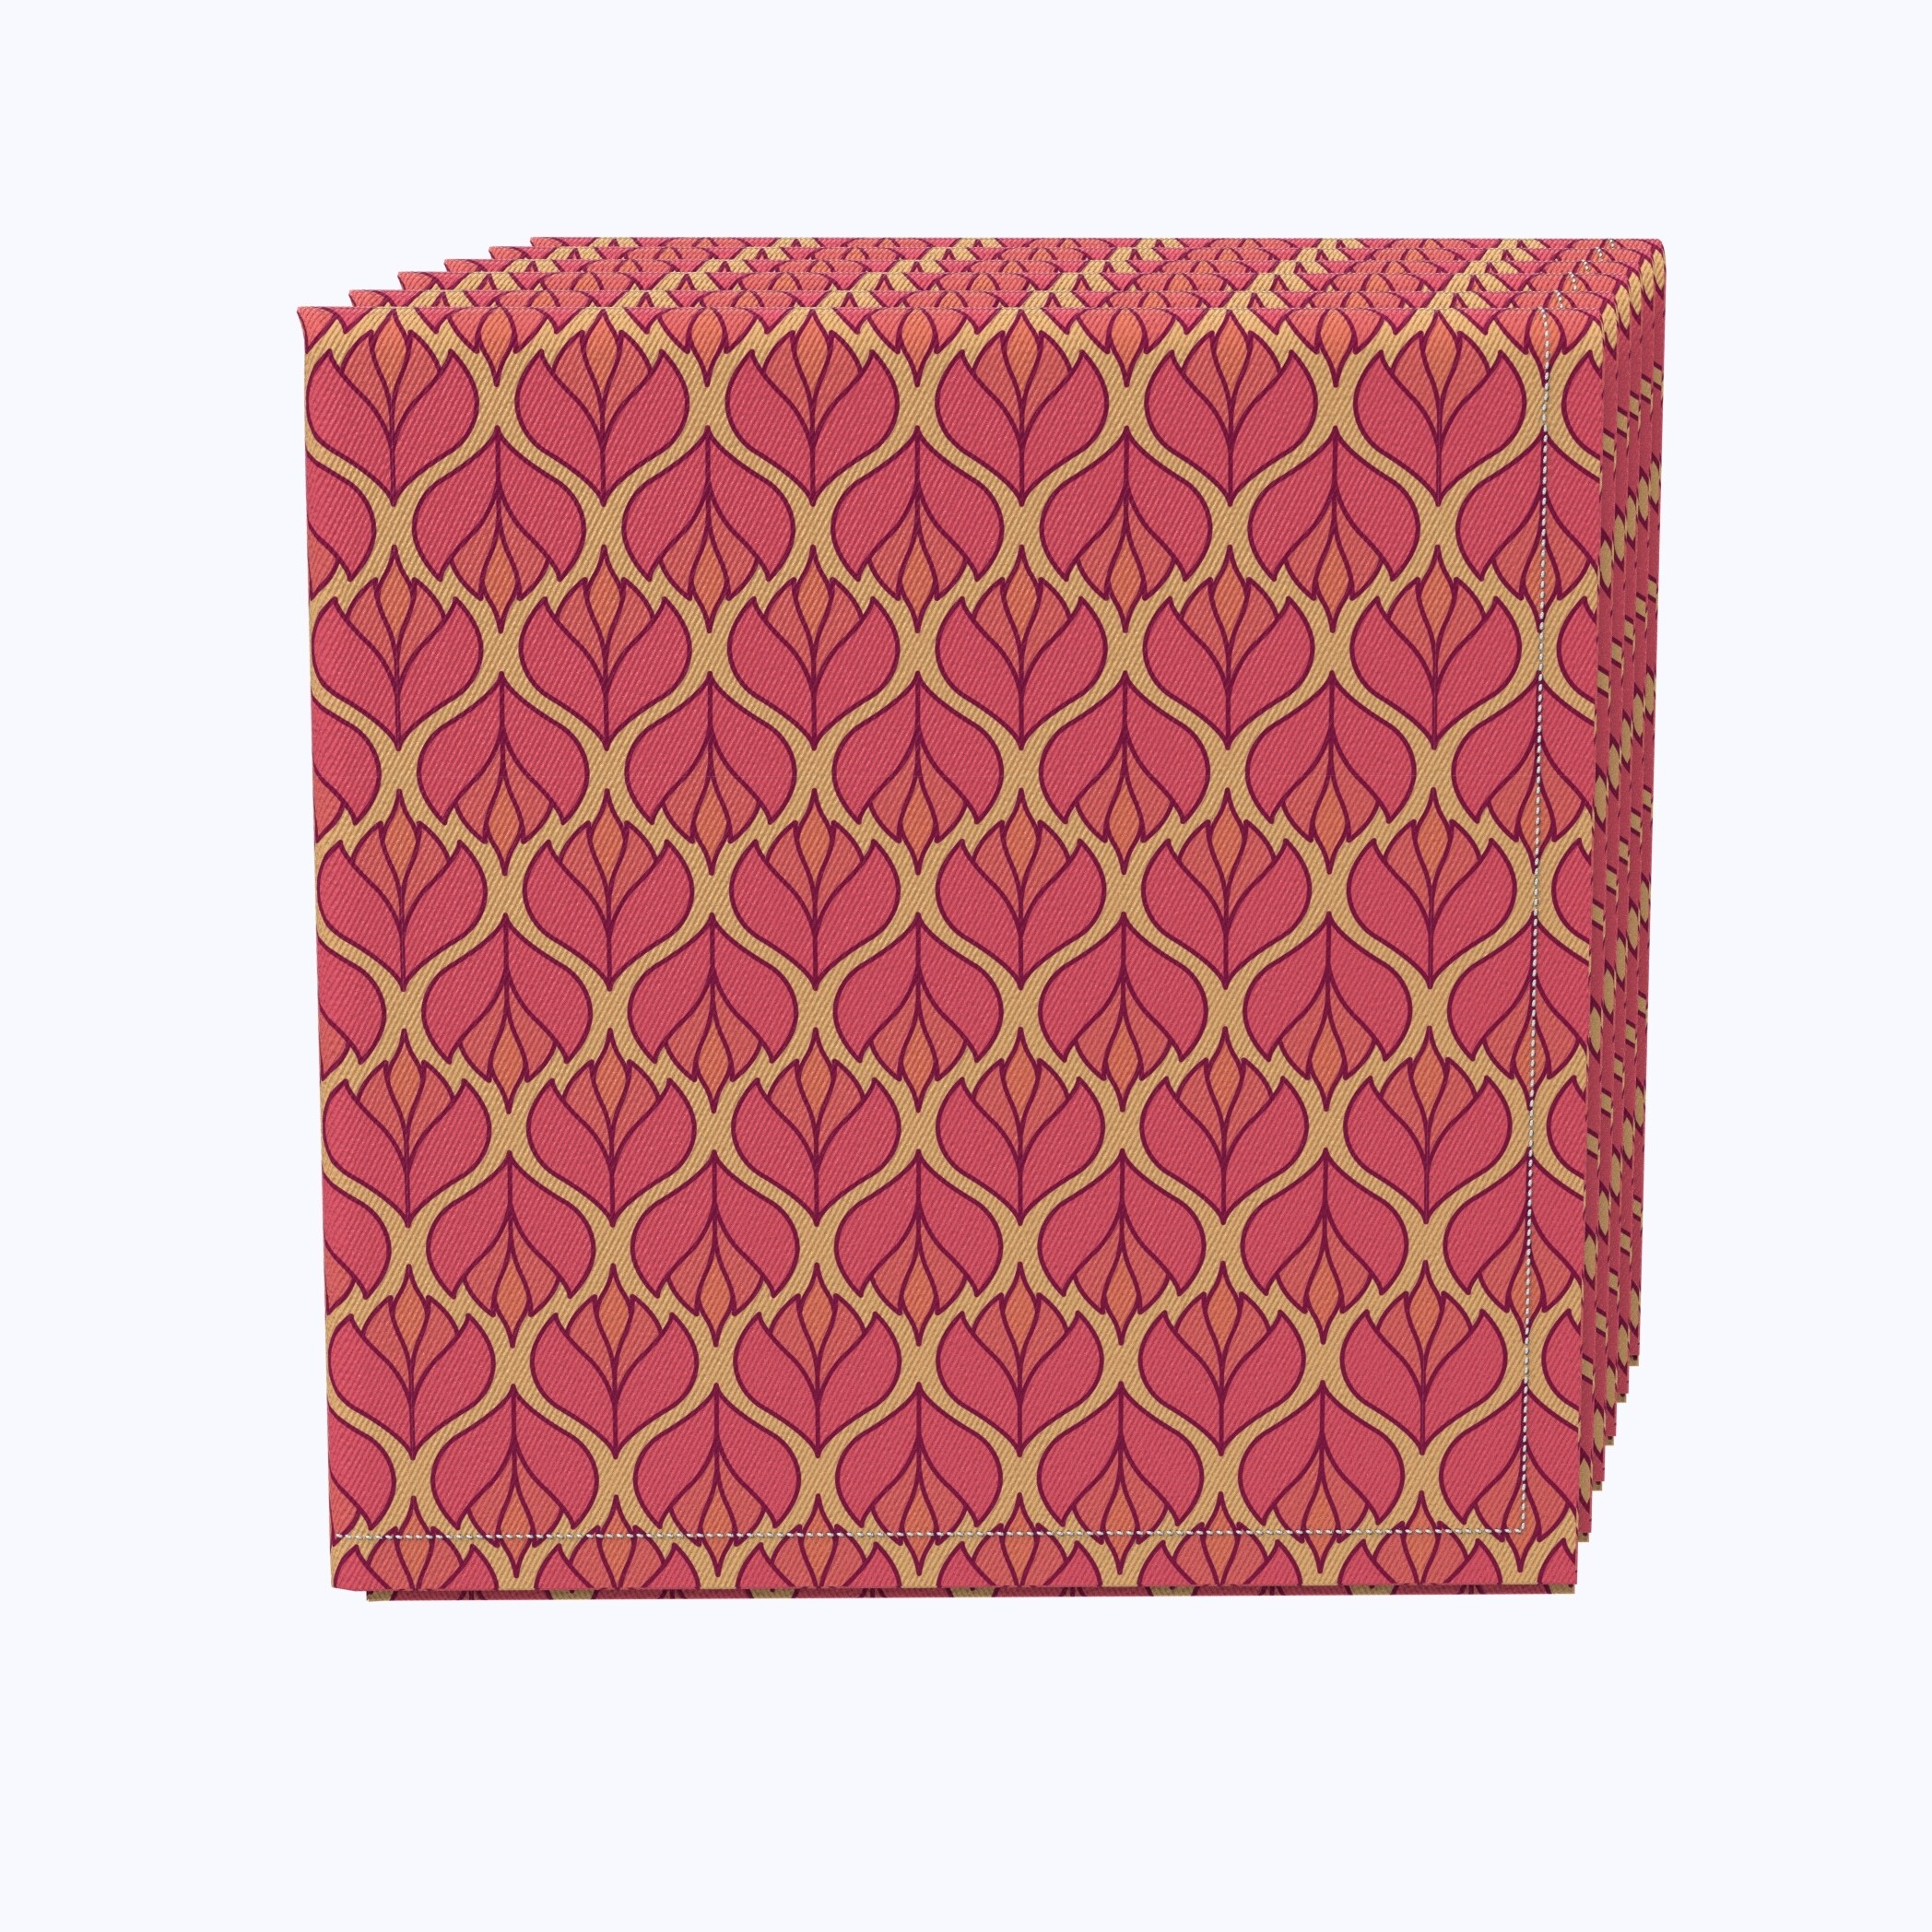 Fabric Textile Products, Inc. Napkin Set of 4, 100% Cotton, 20x20", Floral 106 - 20 x 20